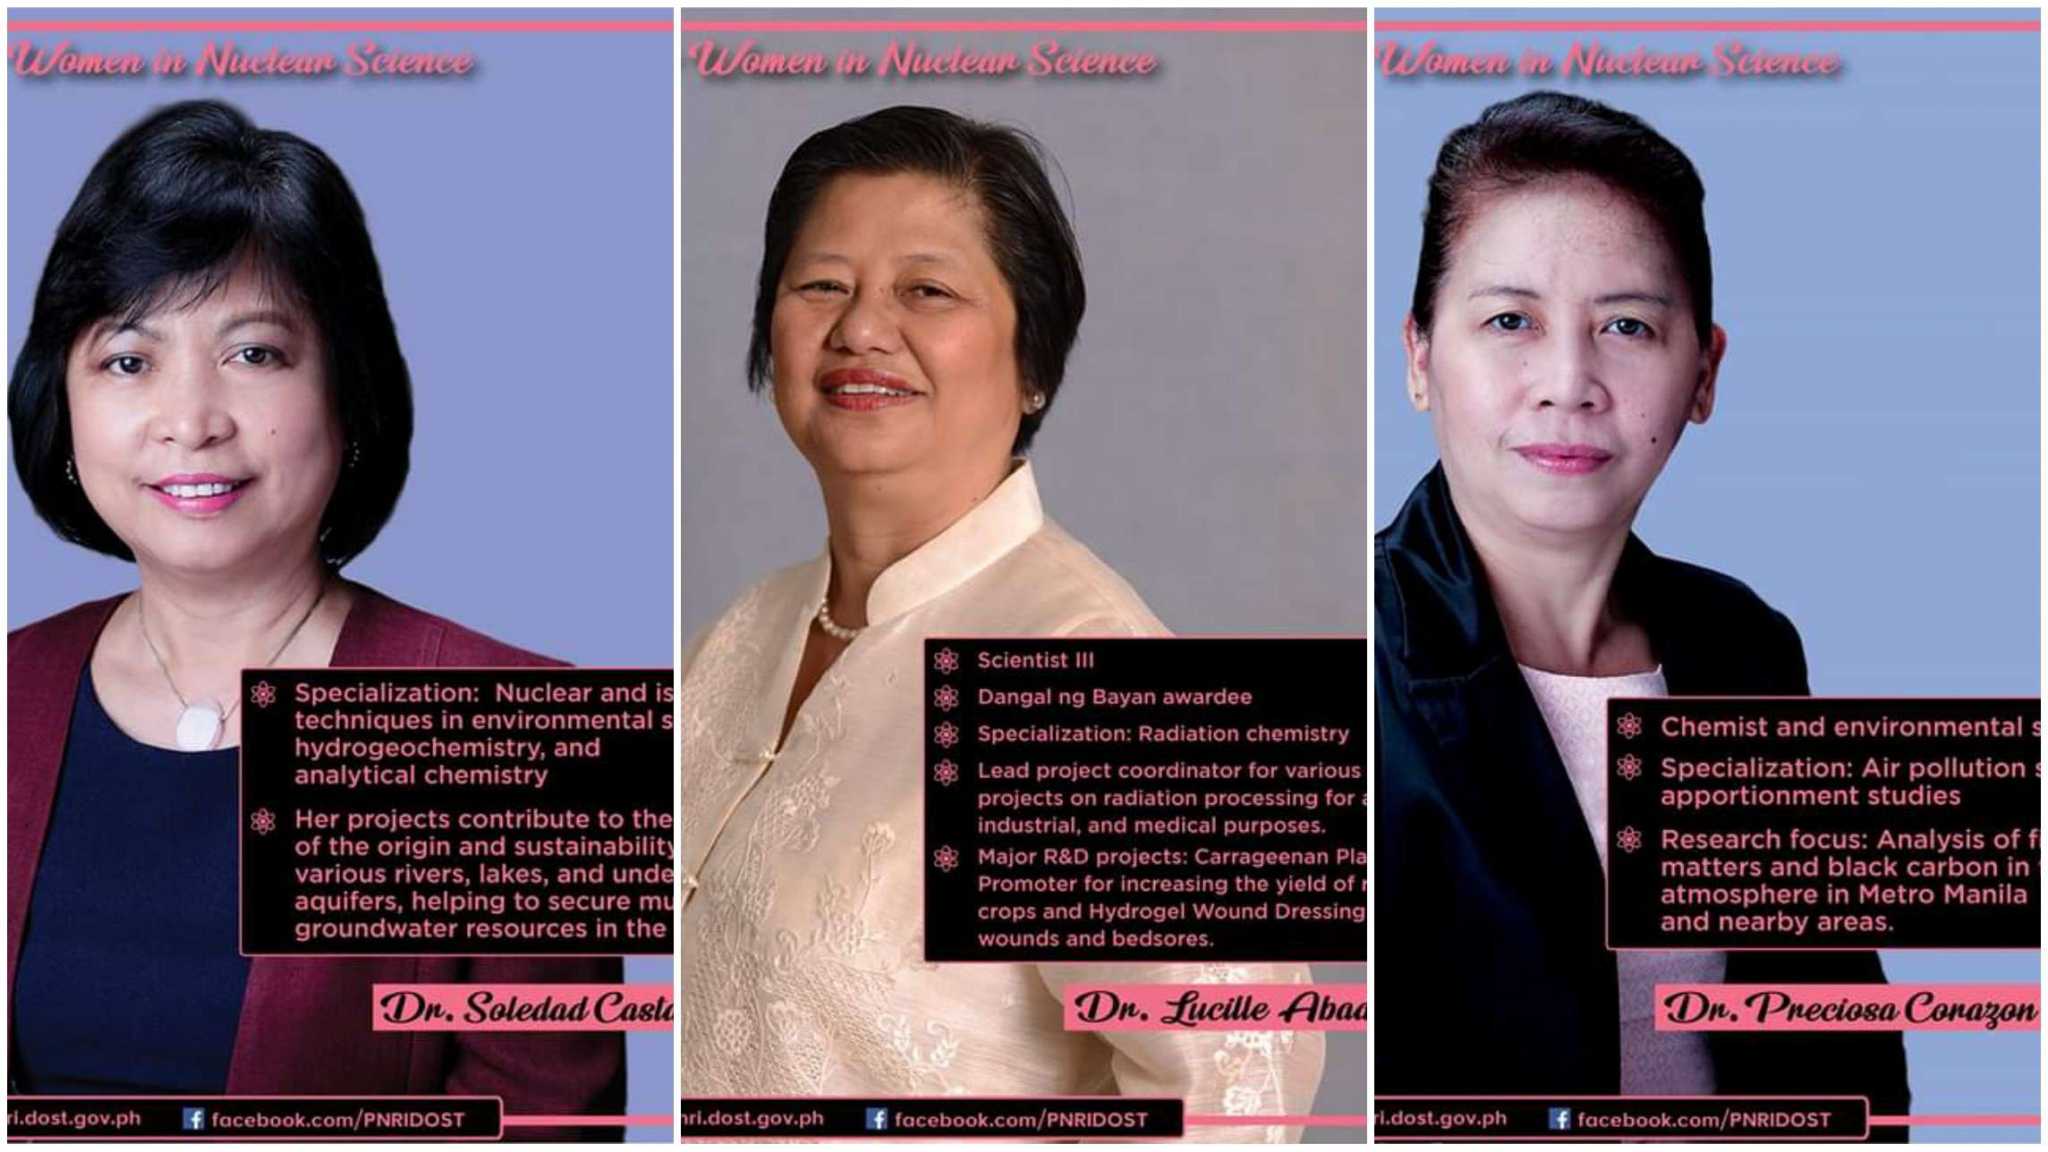 Filipino women nuclear scientists honored on International Women's ...